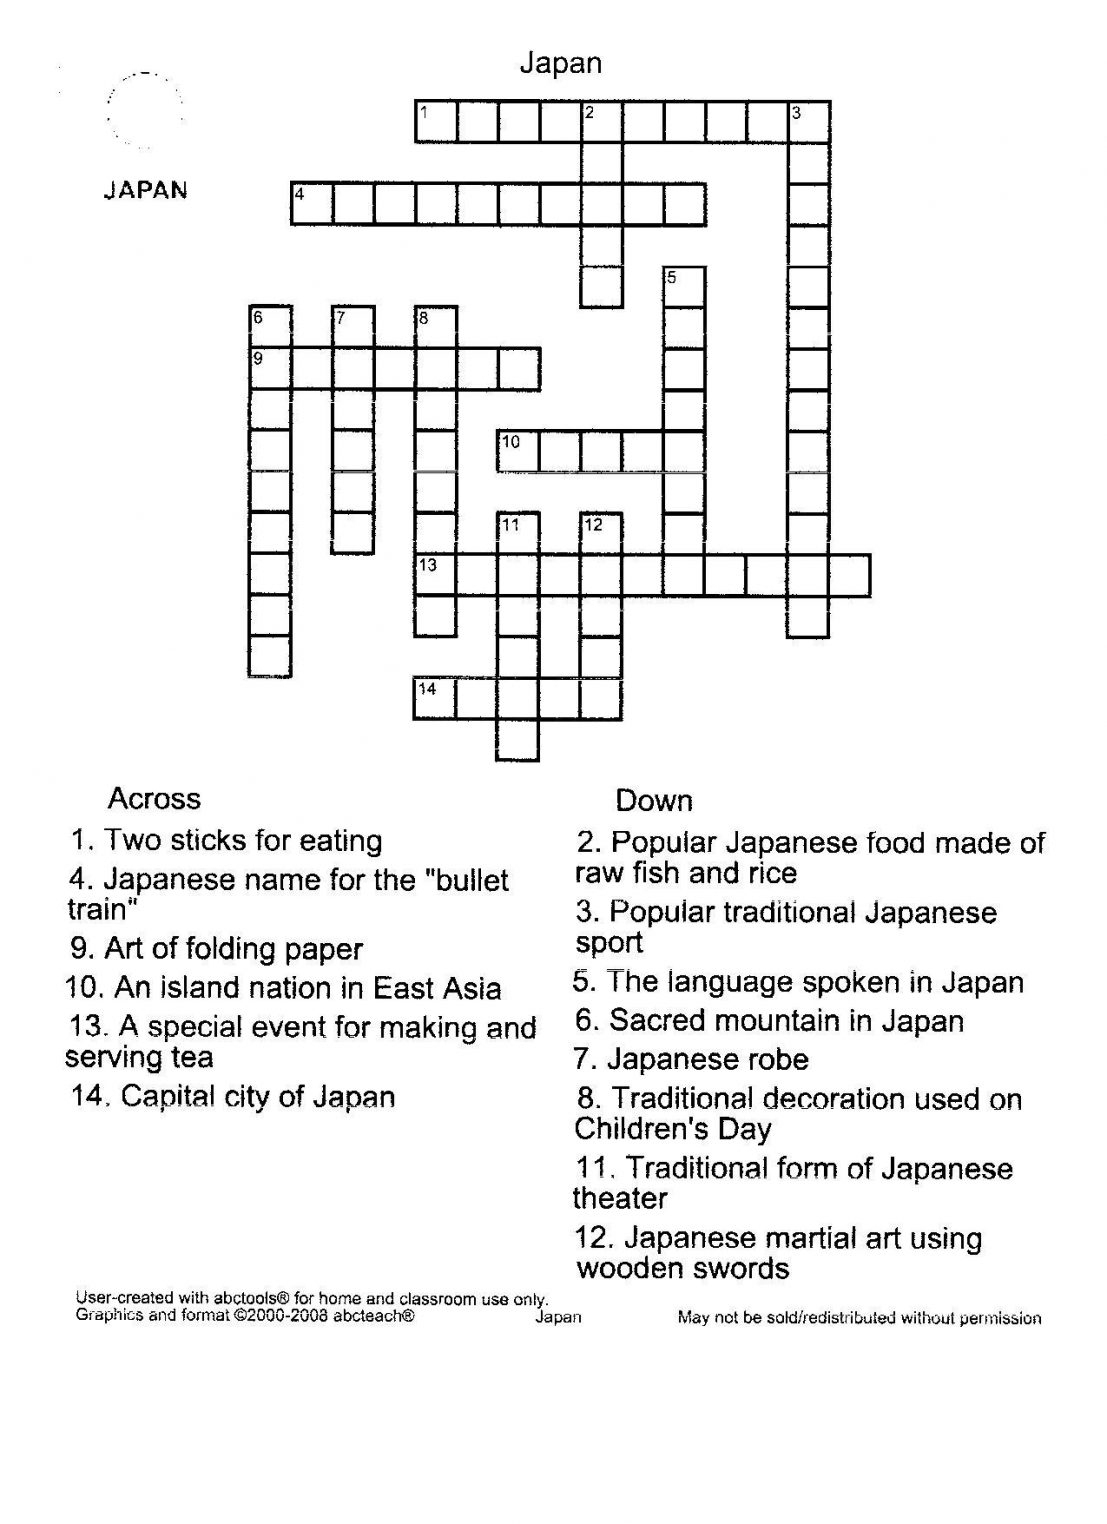 Free Crossword Puzzle Maker Printable - Hashtag Bg - Free Crossword - Printable Crossword Puzzle Generator